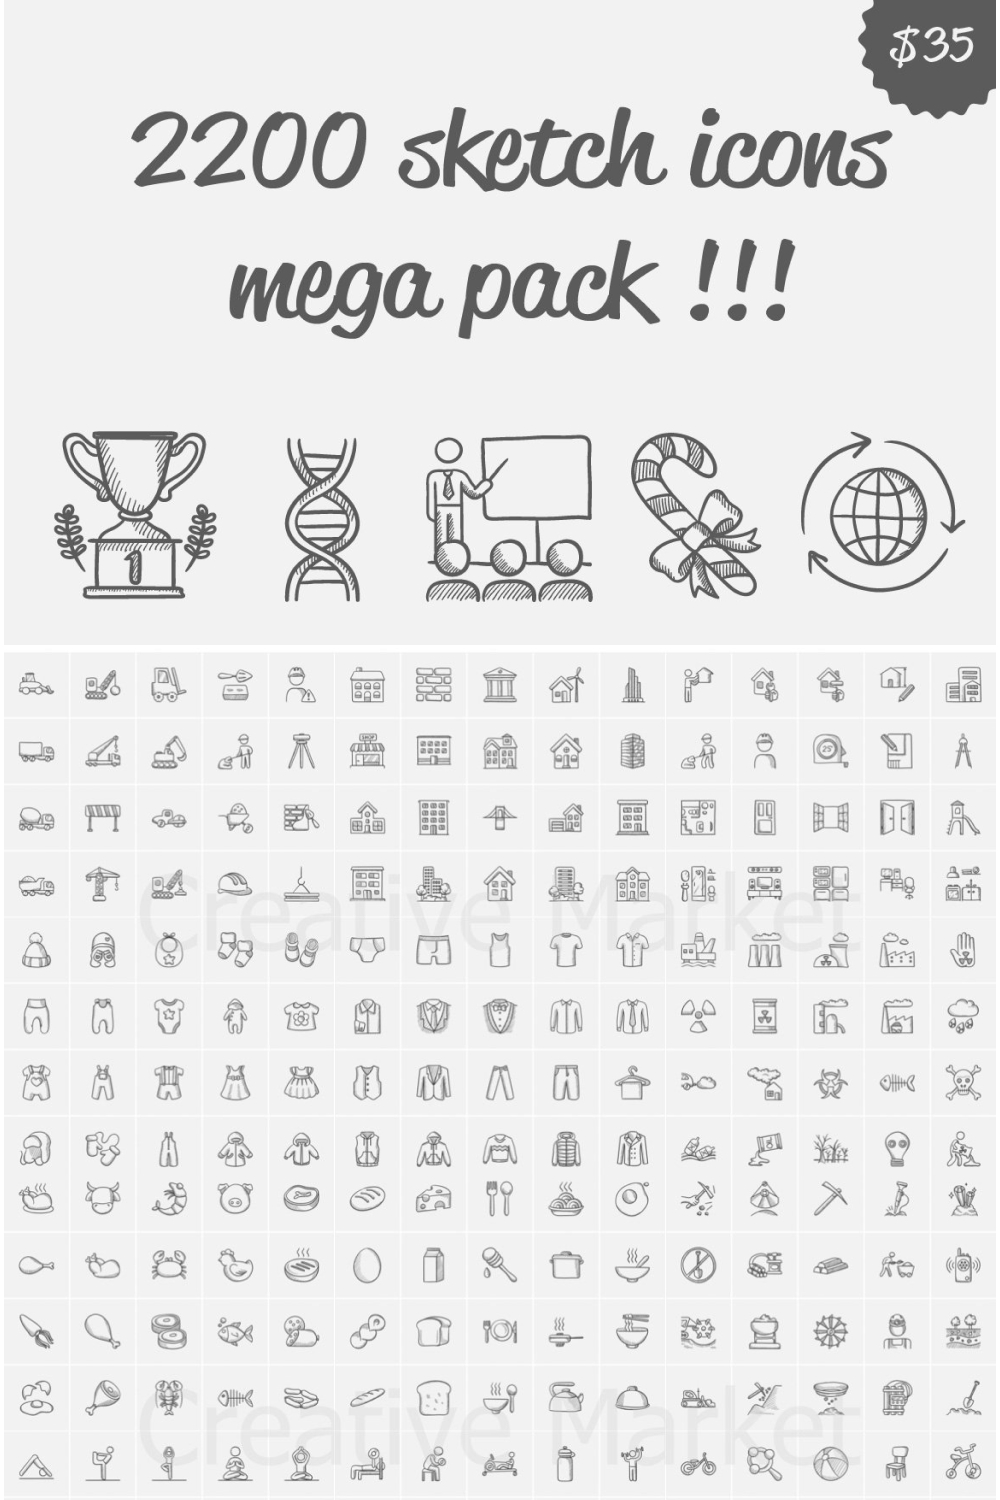 2200 Vector Sketch Icons Mega Pack - Pinterest.